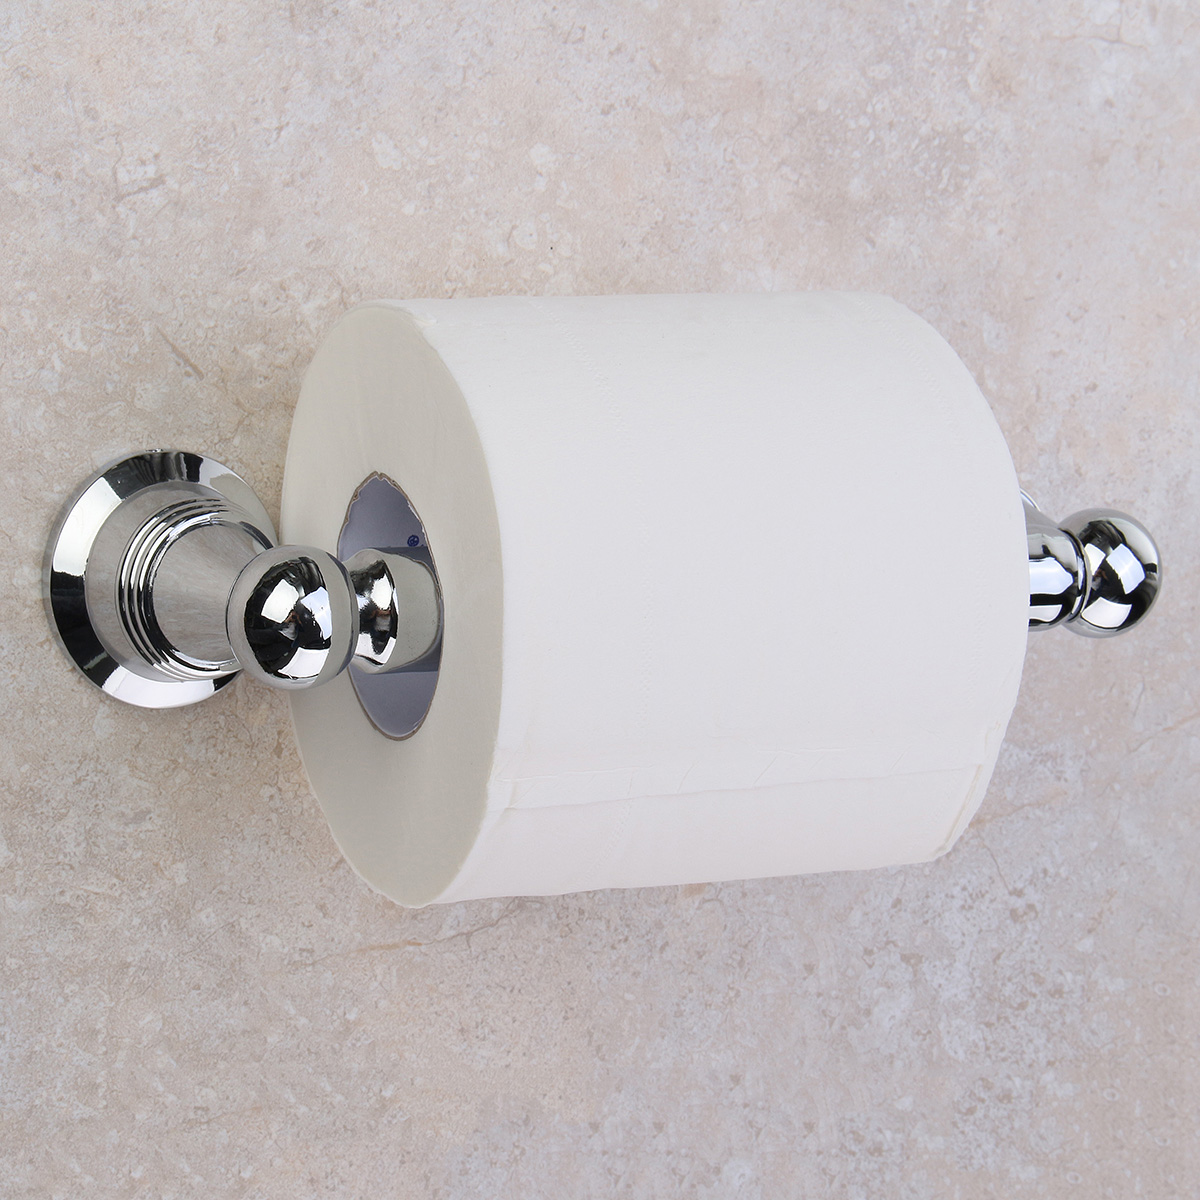 Stainless-Steel-Paper-Holder-Bar-Bathroom-Toilet-Paper-Roll-Tissue-Rack-Shelf-Wall-Mounted-1363697